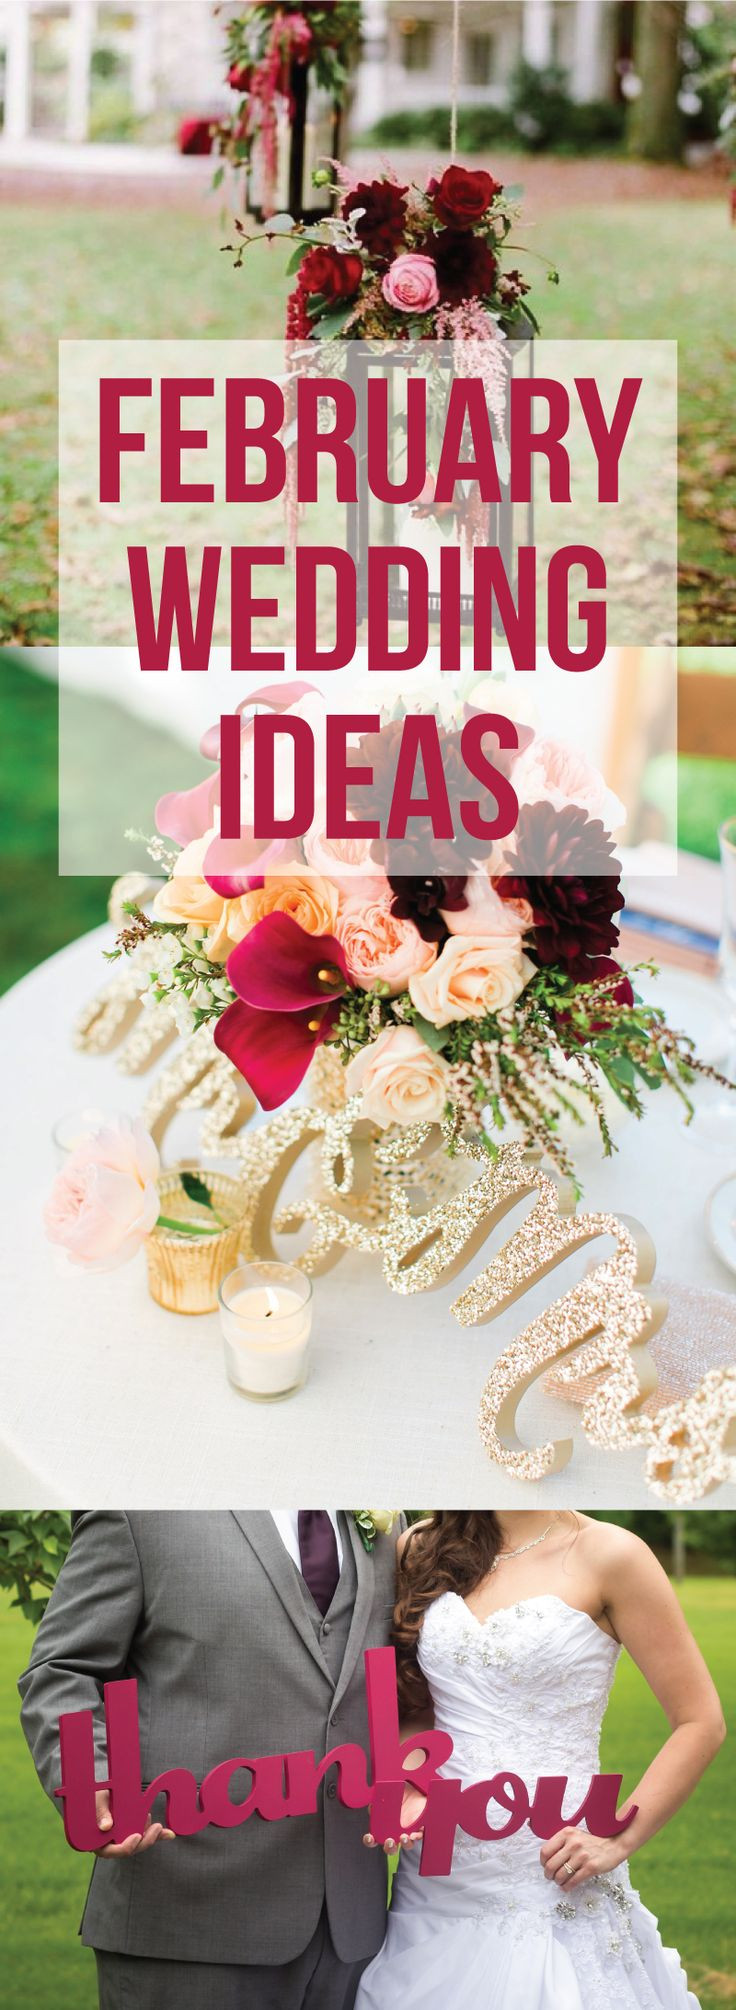 Wedding Themes For February
 Best 25 February wedding ideas on Pinterest